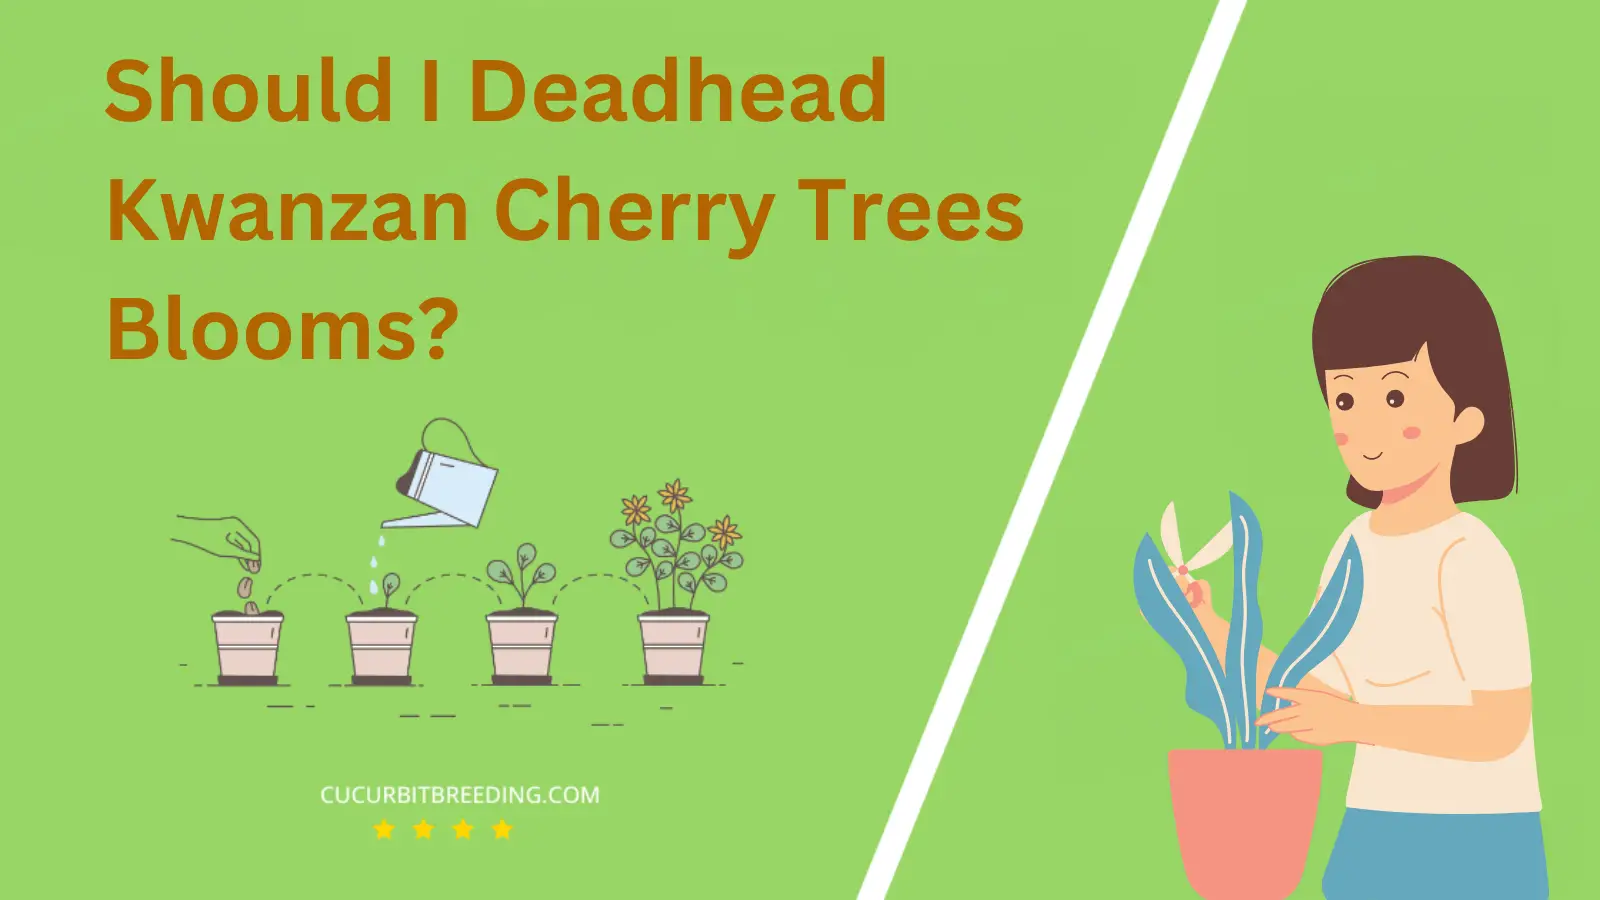 Should I Deadhead Kwanzan Cherry Trees Blooms?